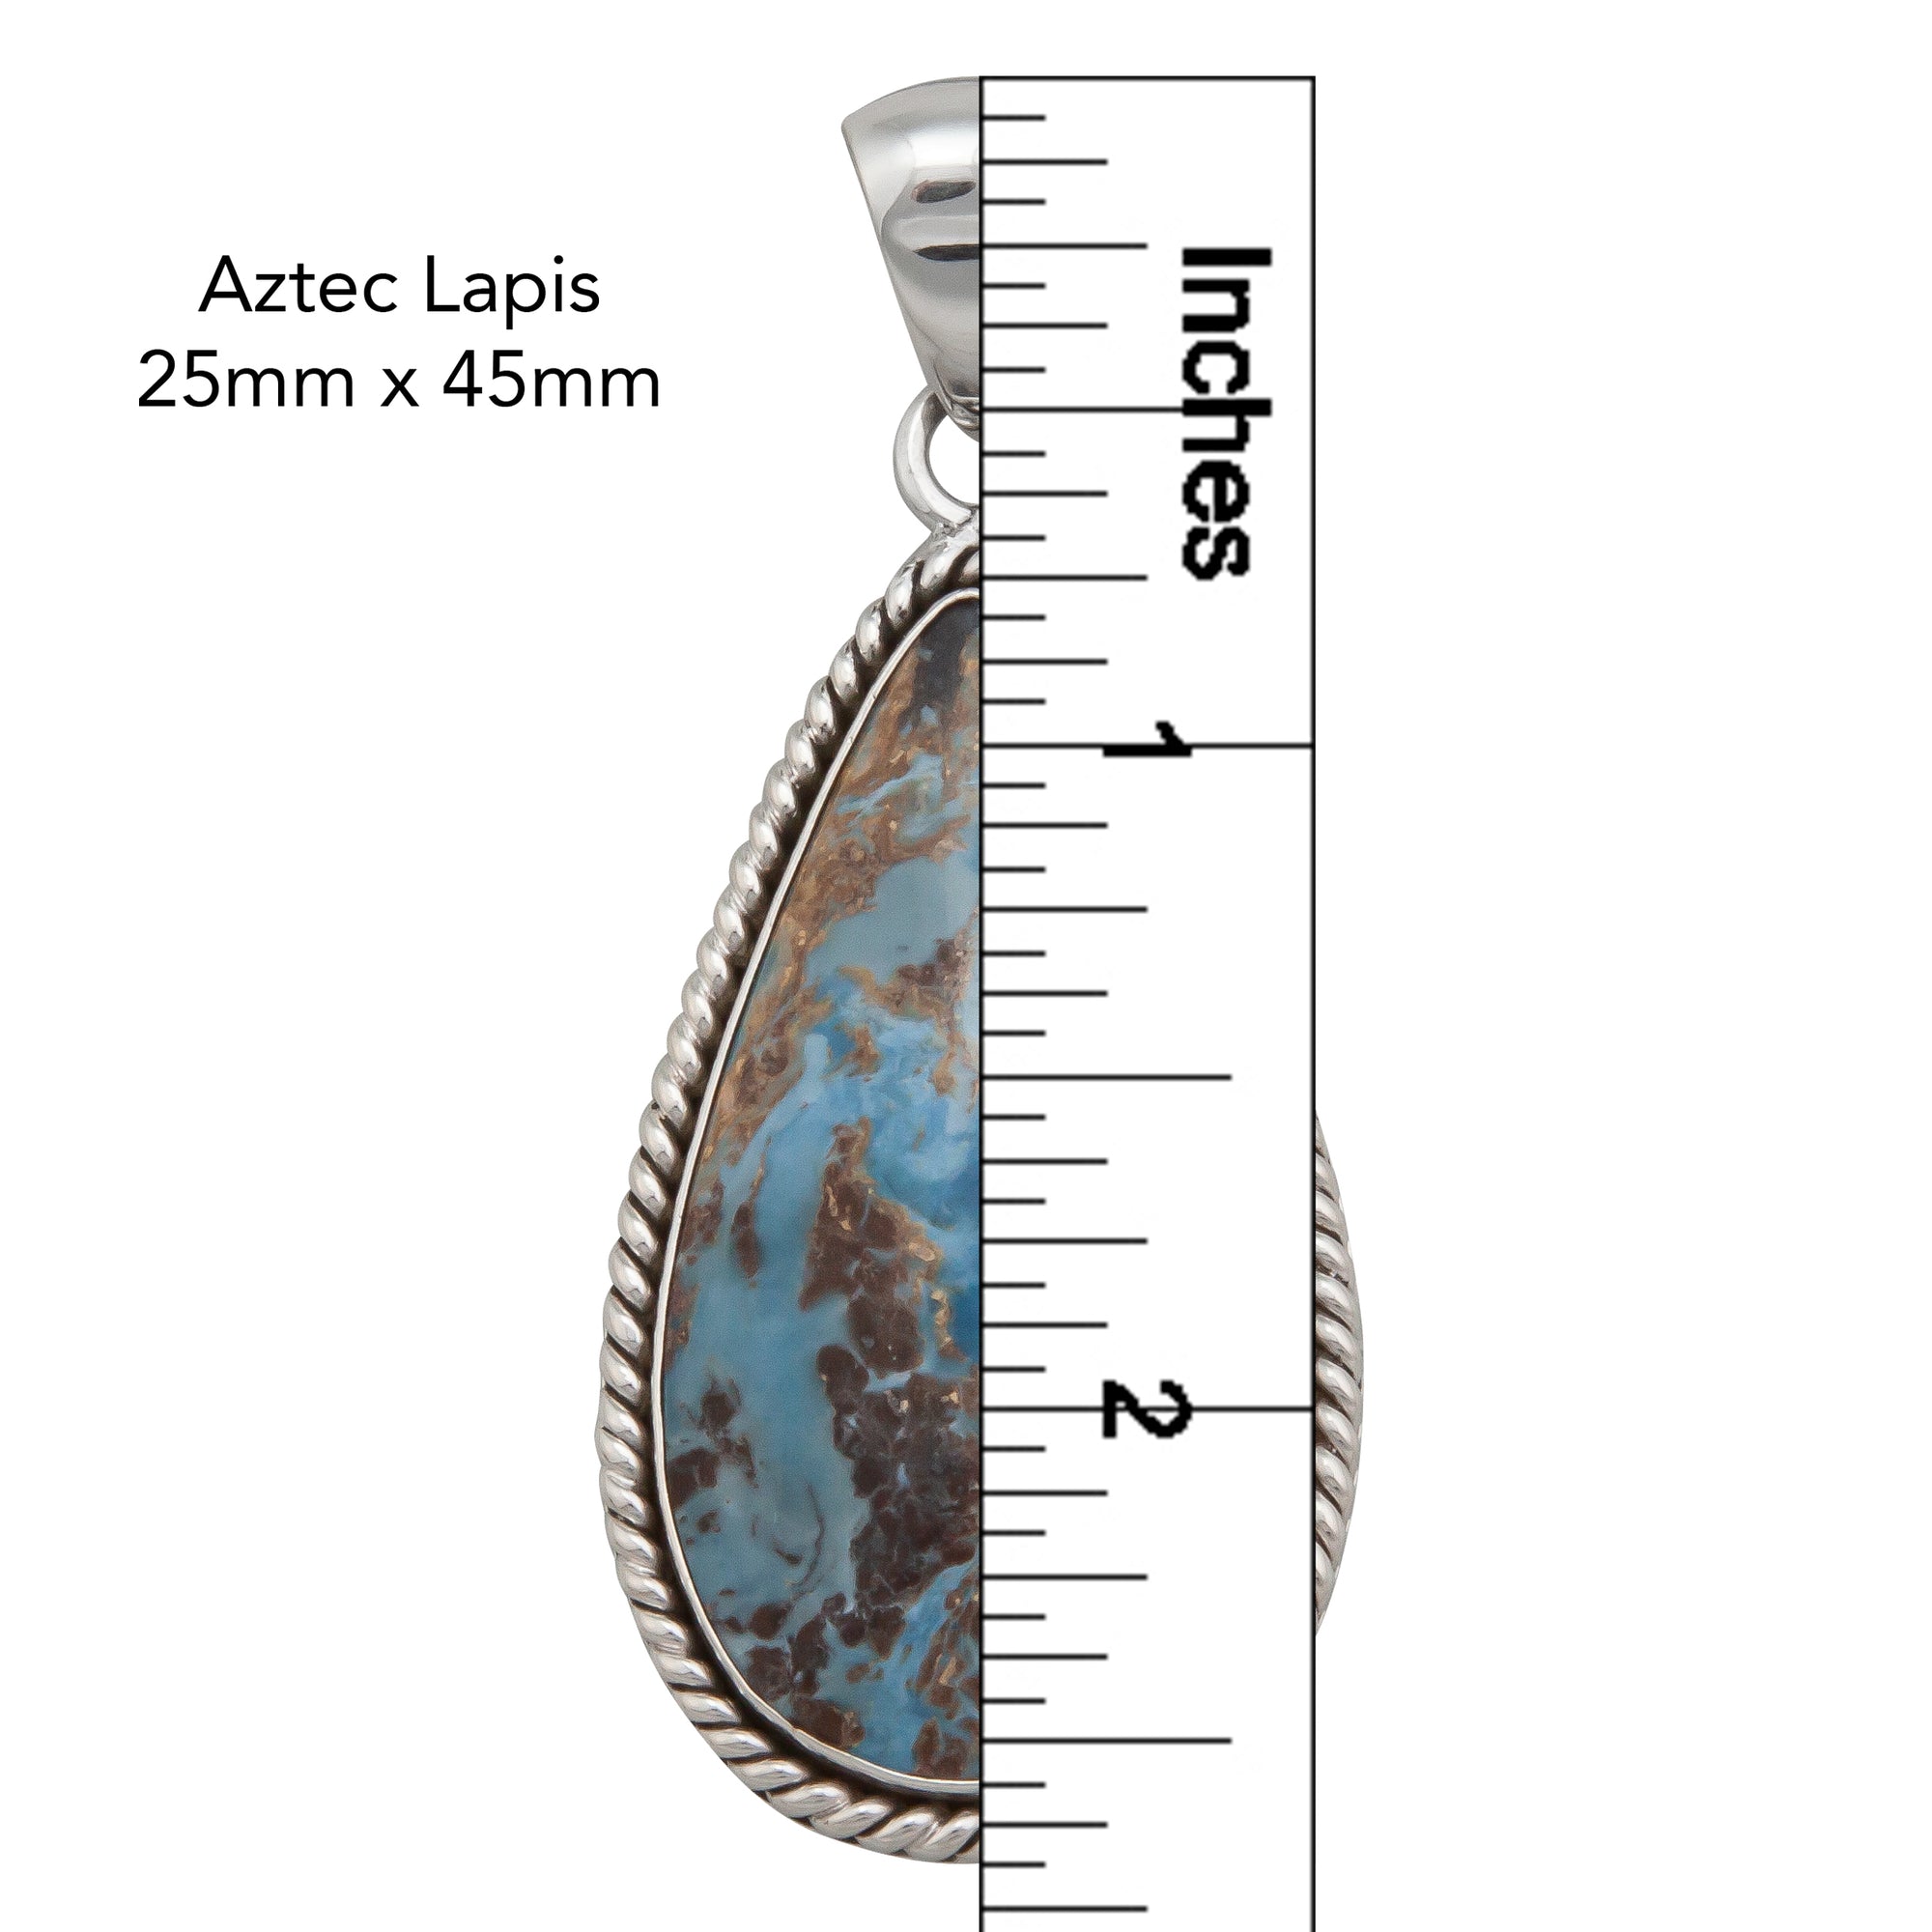 Charles Albert Jewelry - Sterling Silver Aztec Lapis Teardrop Rope Pendant - Measurements